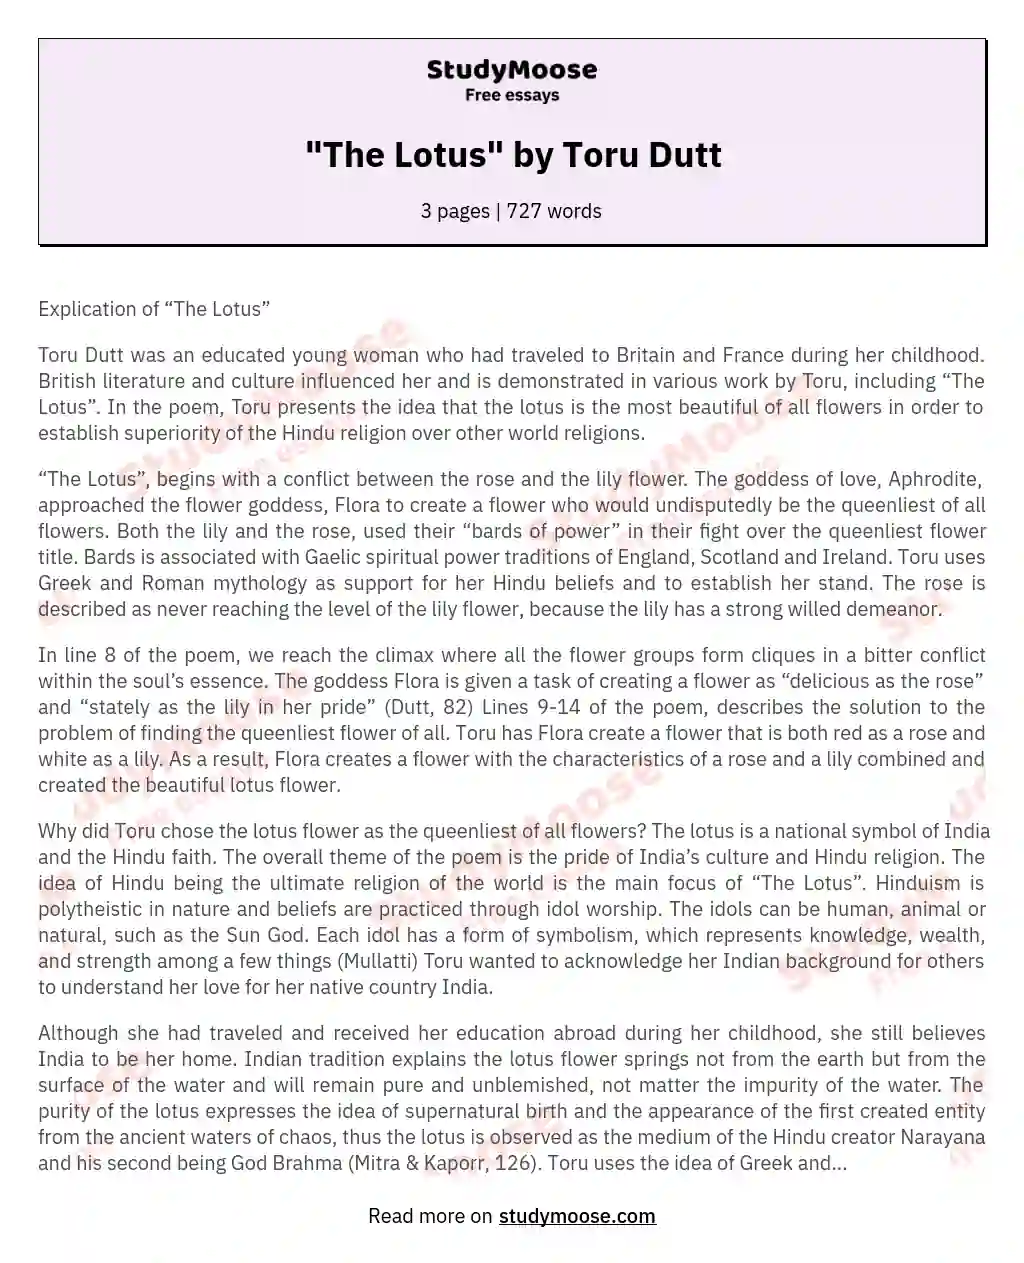 "The Lotus" by Toru Dutt essay